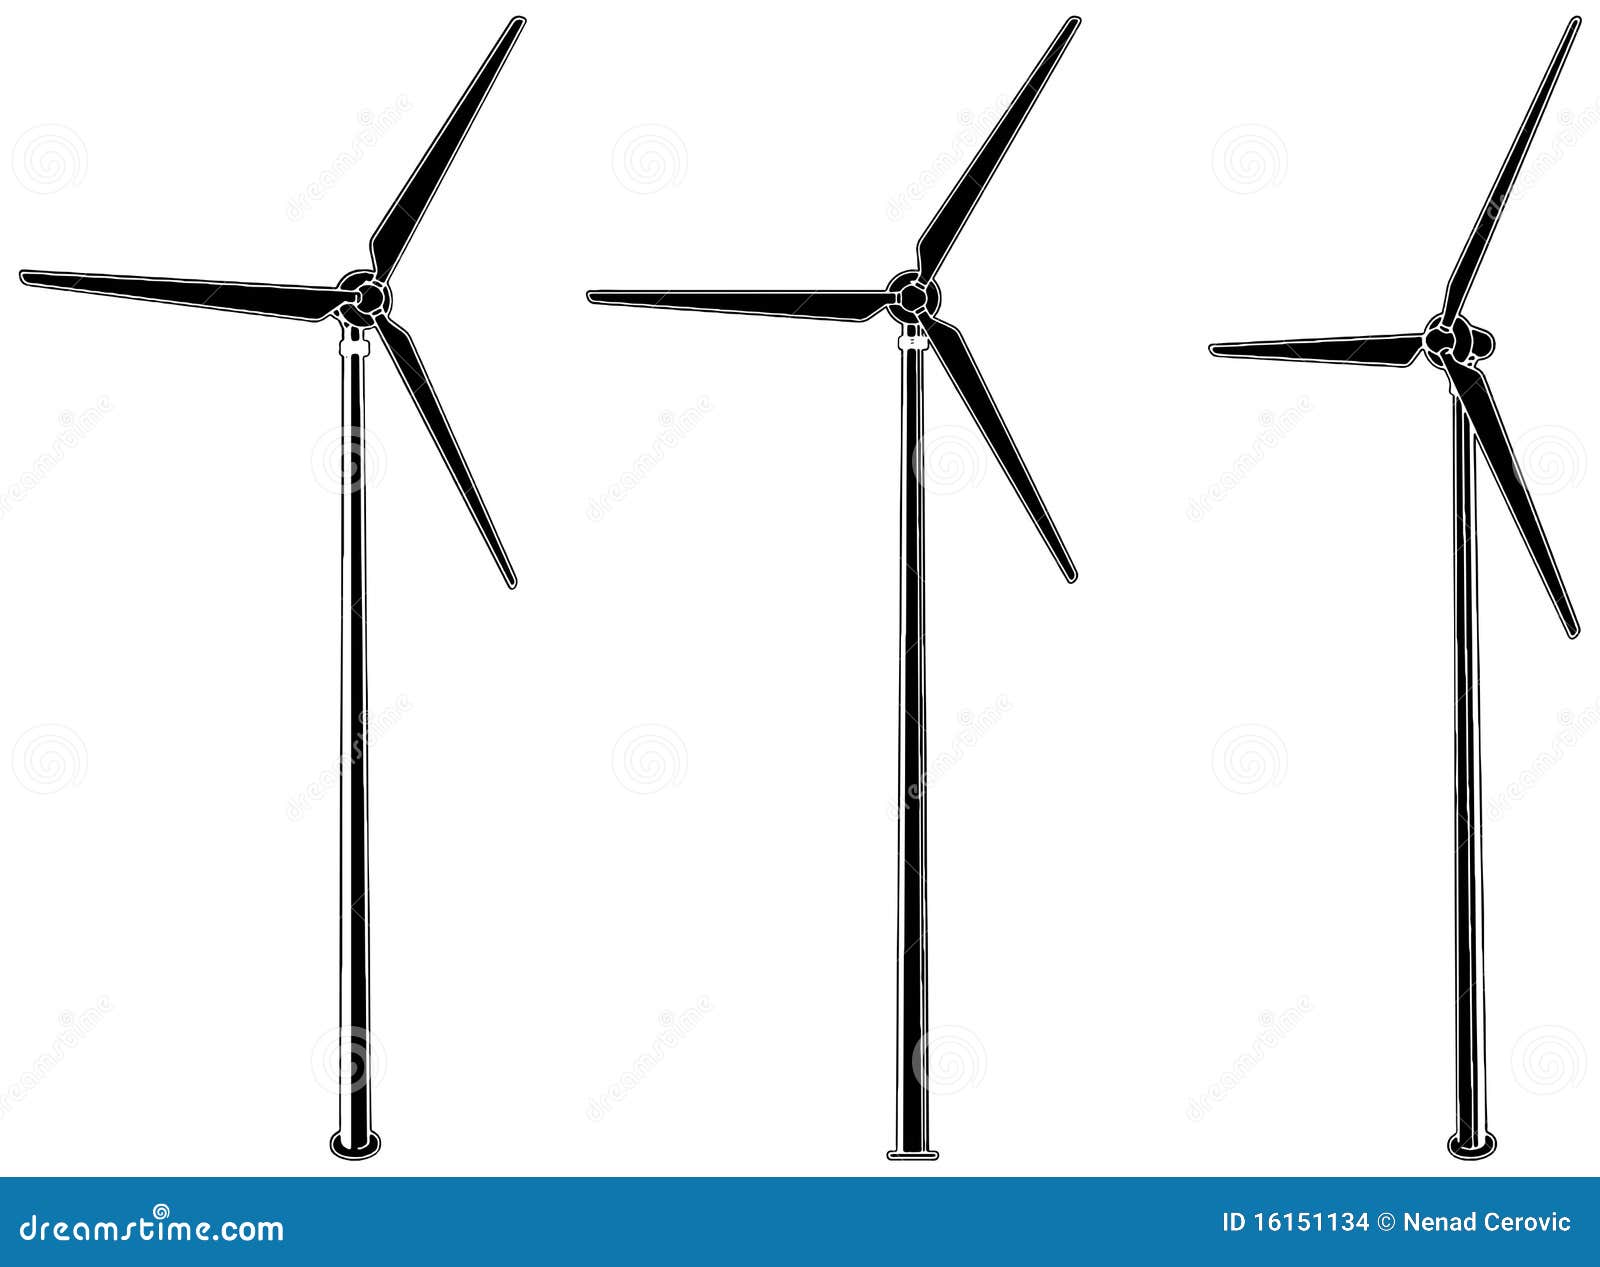 Wind Turbine Vector 01 Stock Images - Image: 16151134